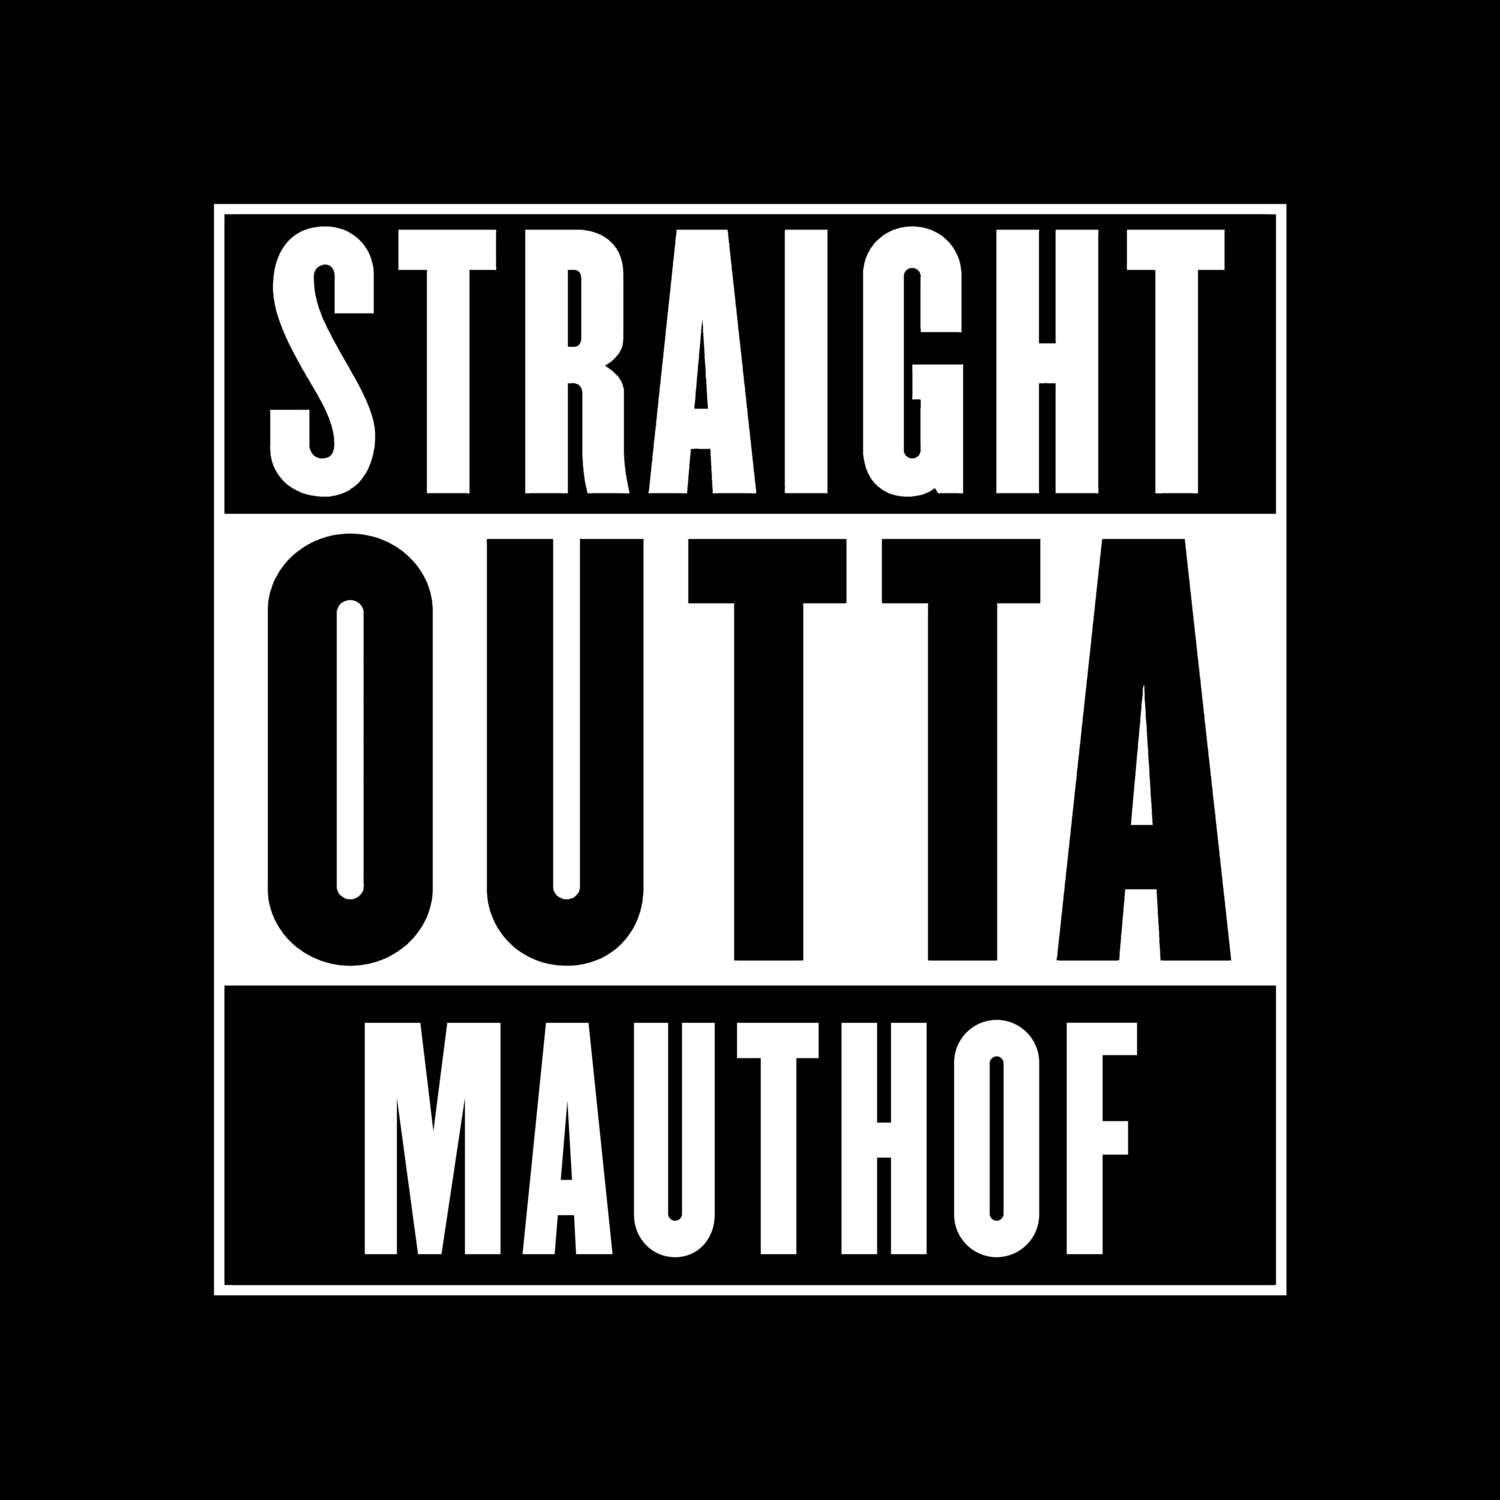 Mauthof T-Shirt »Straight Outta«